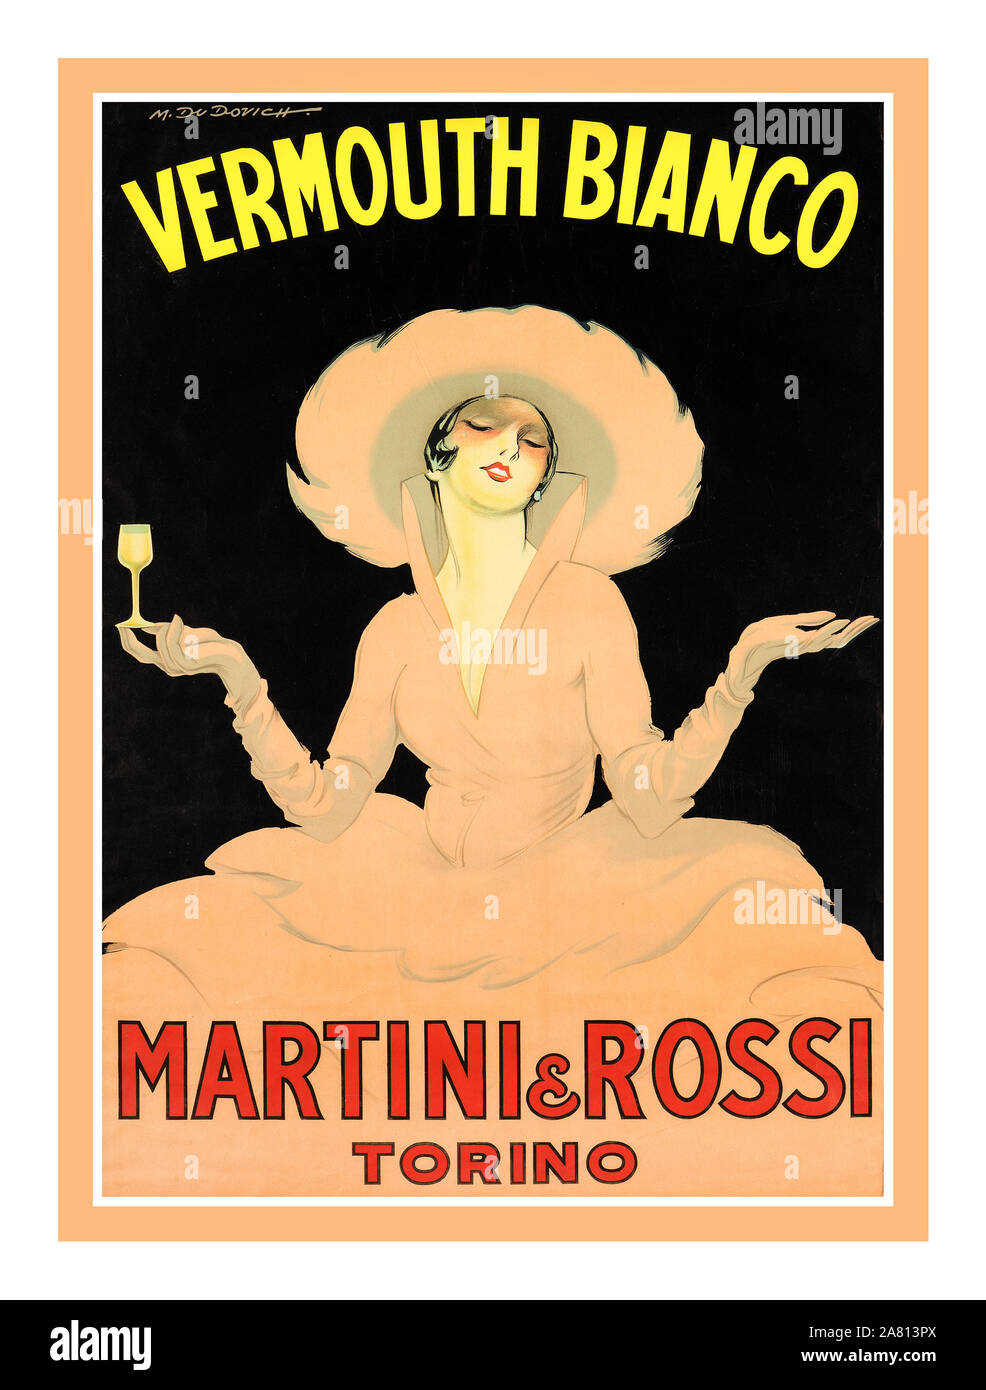 VERMOUTH BIANCO 50er Jahre Vintage Drinks Lithographie Poster von MARCELLO DUDOVICH, Lithographie Vermouth Bianco Vintage Poster, Turin, Italien, 1959. Stockfoto